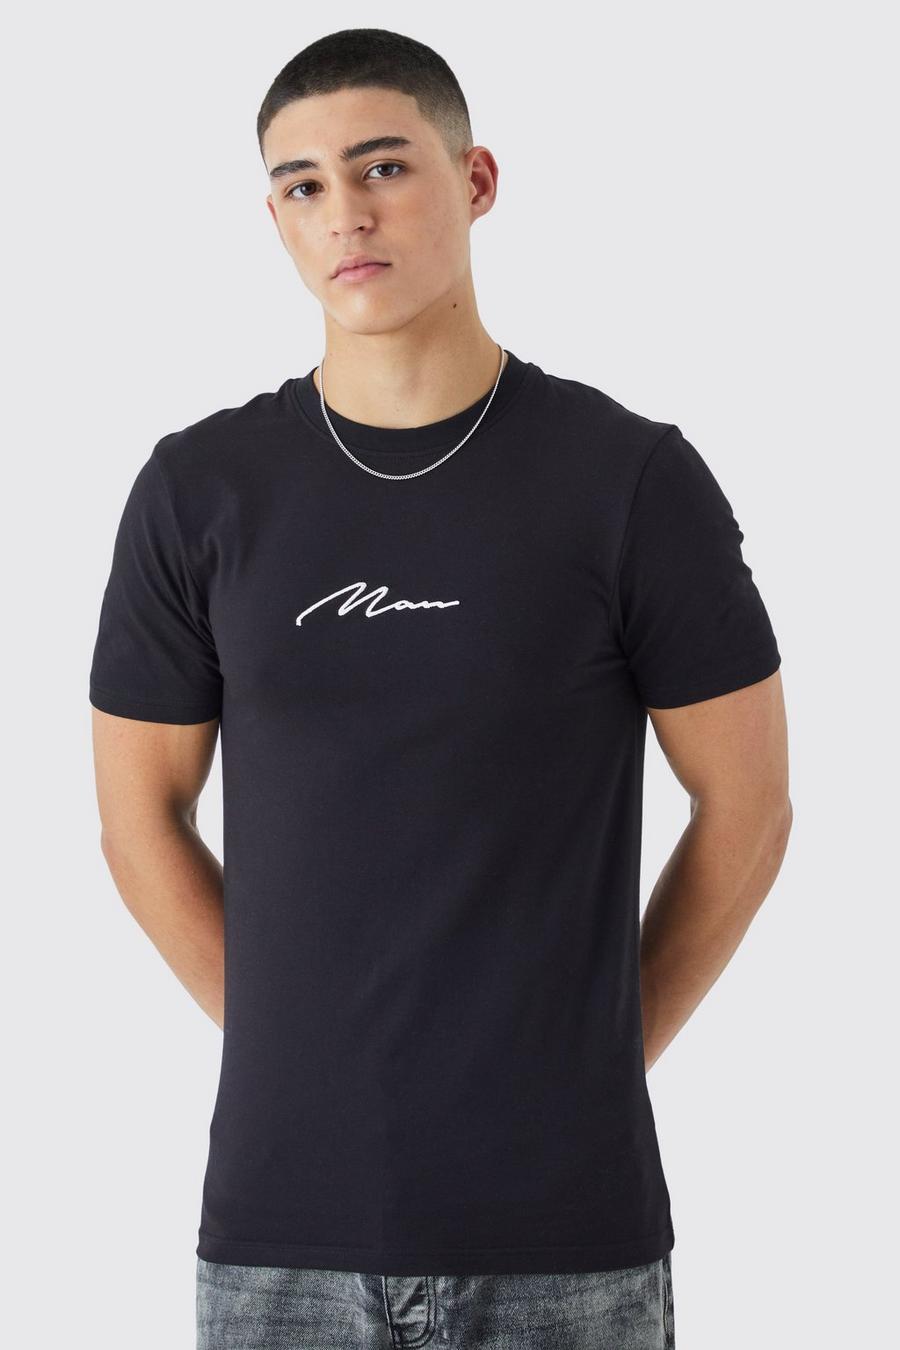 T-shirt attillata con firma Man, Black